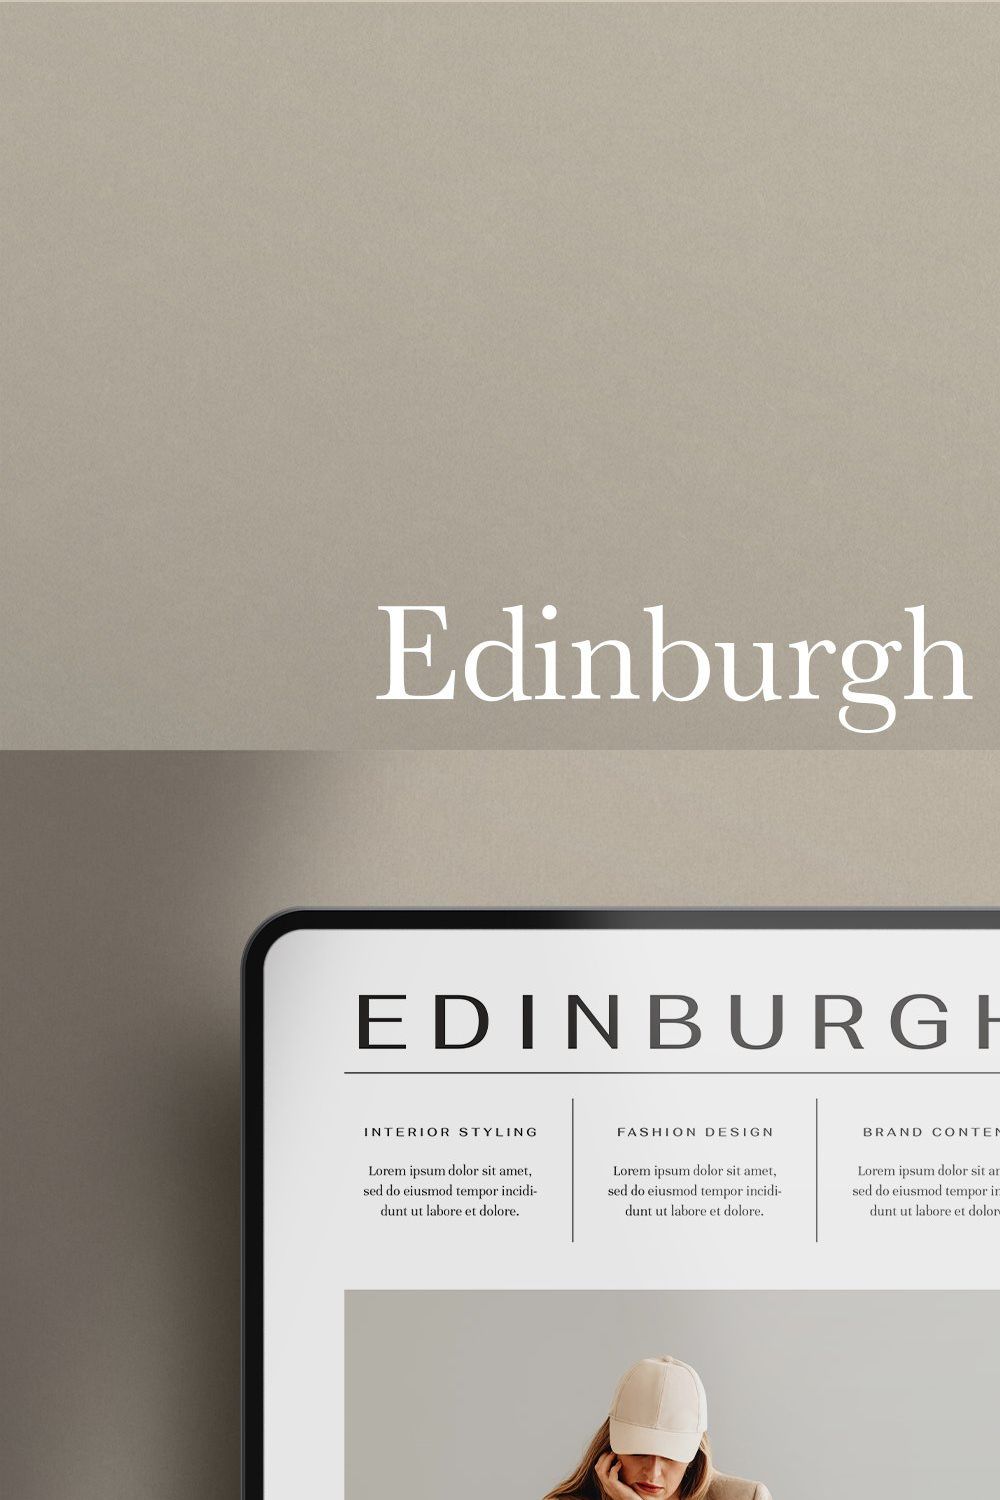 Edinburgh Magazine pinterest preview image.